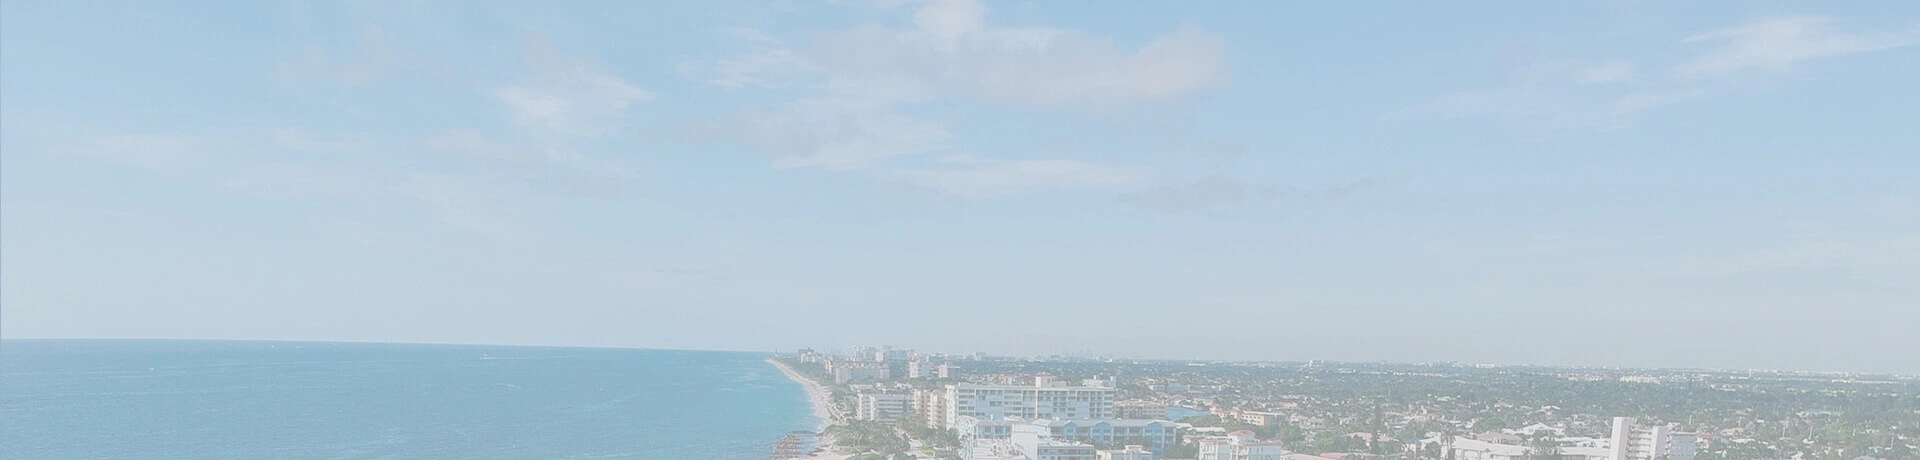 Florida Coastline